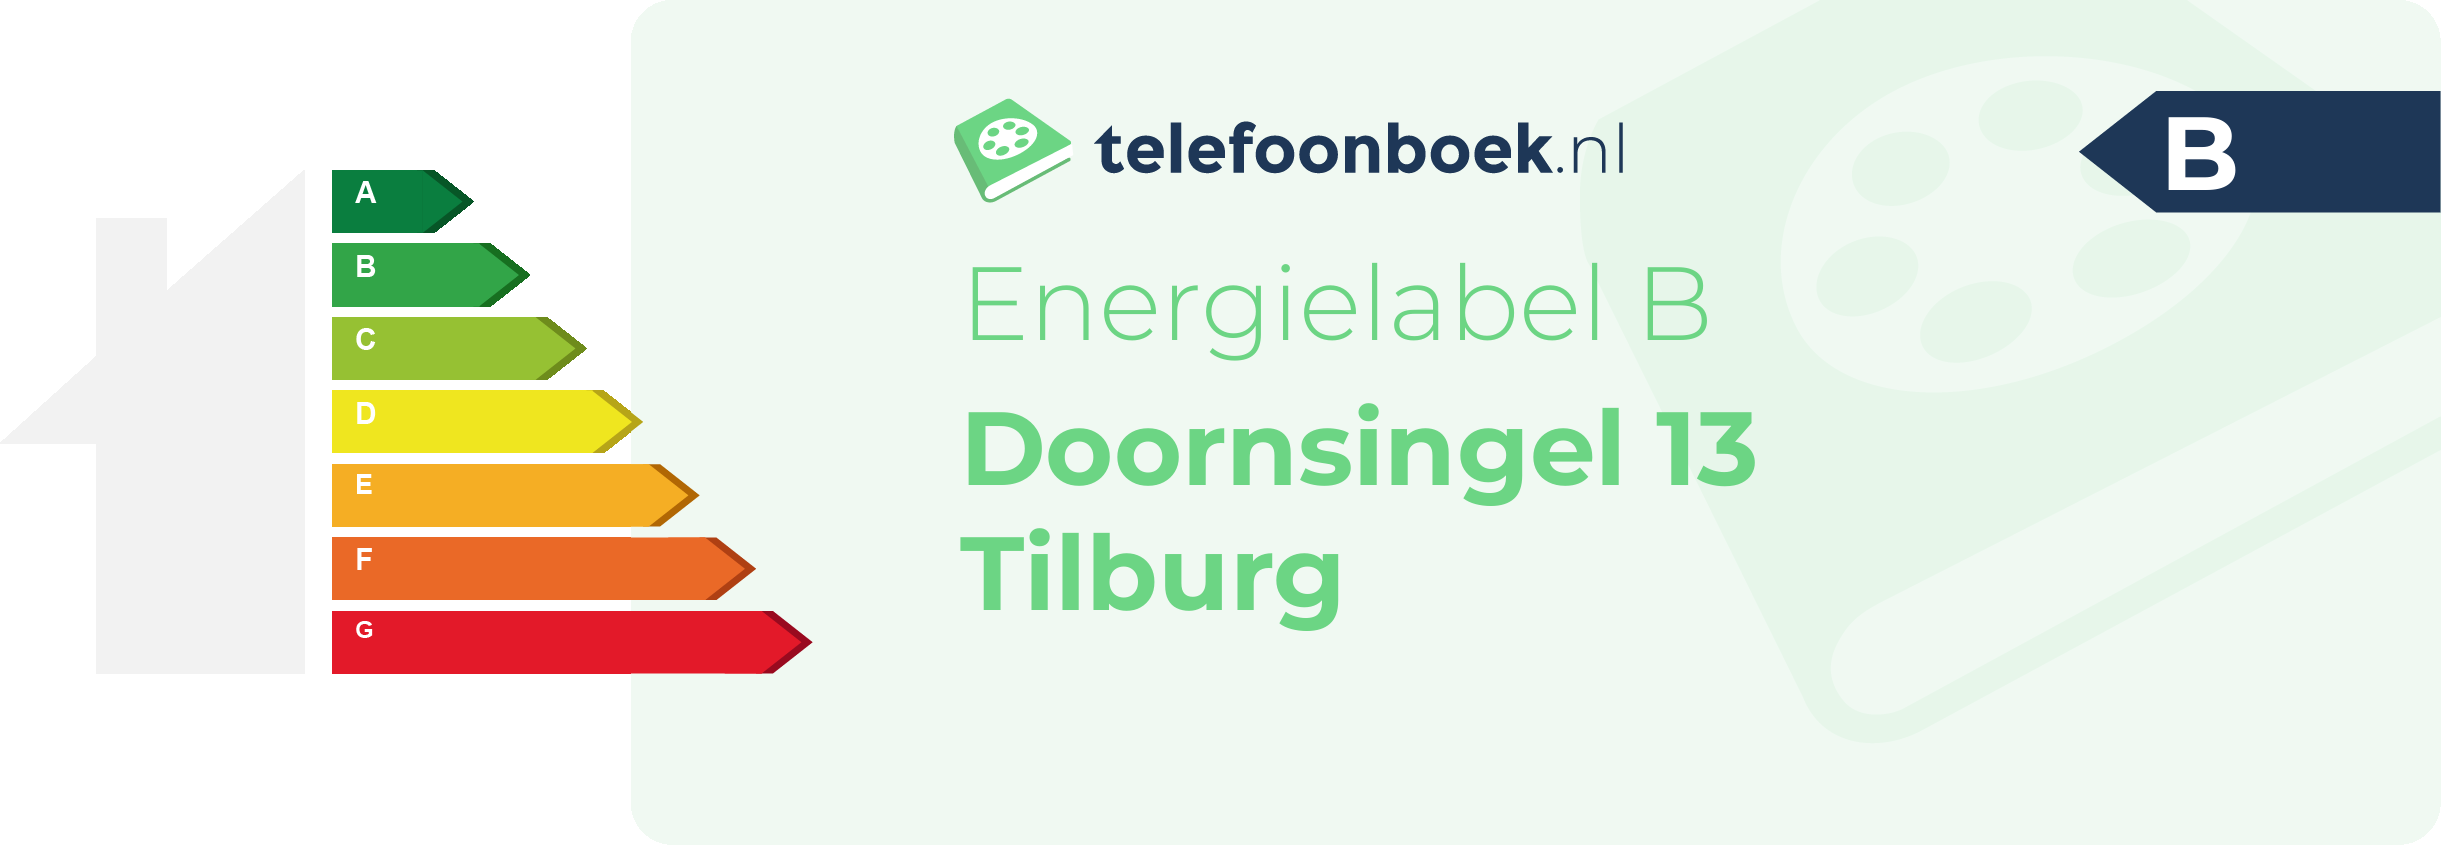 Energielabel Doornsingel 13 Tilburg